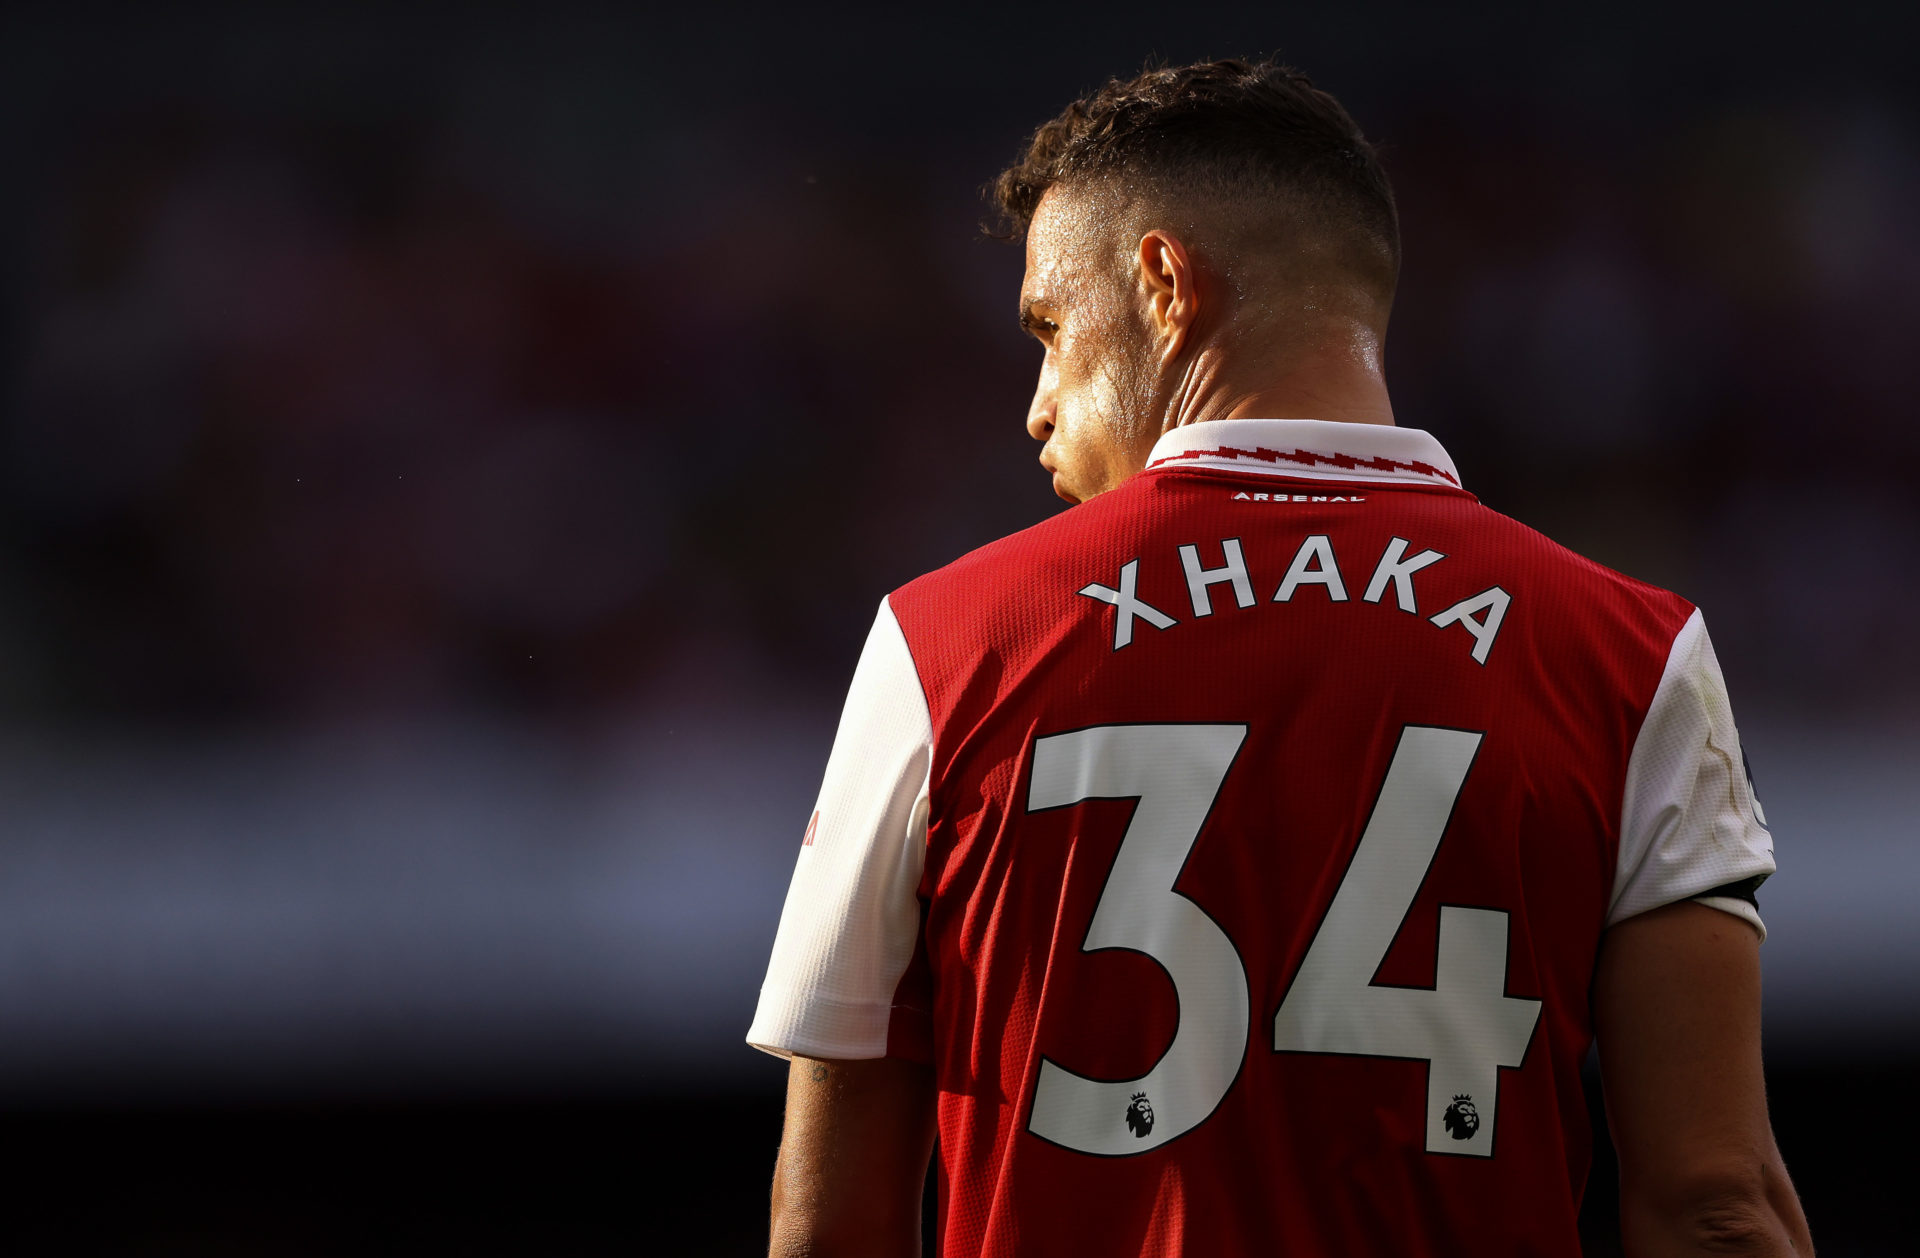 Arsenal were unsure whether to keep Xhaka